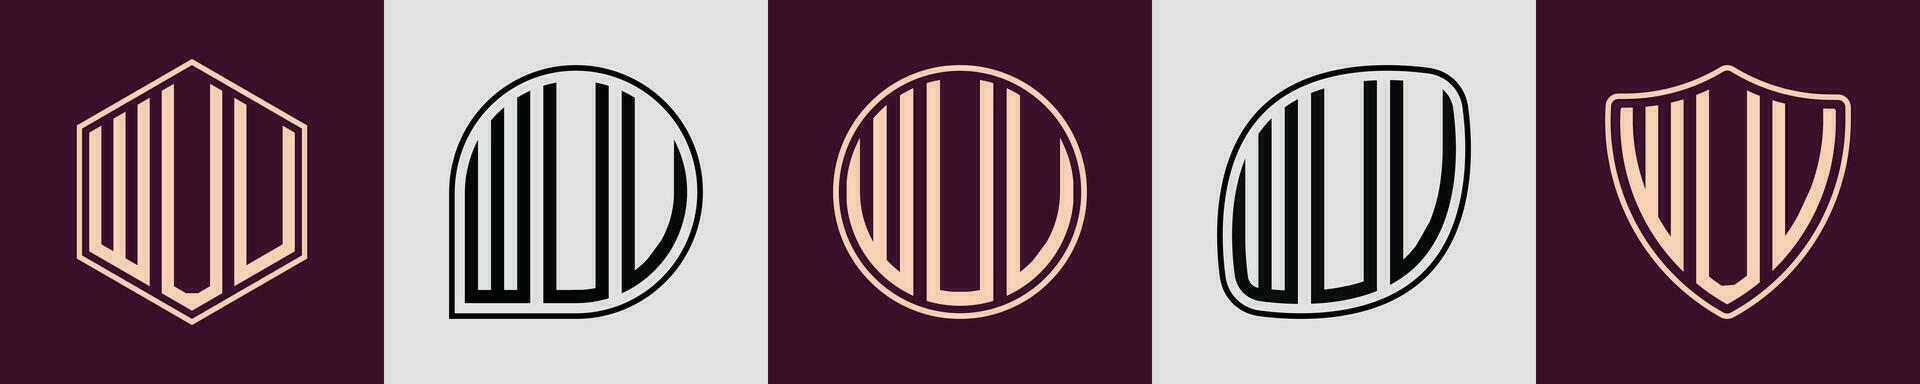 criativo simples inicial monograma wuu logotipo projetos. vetor